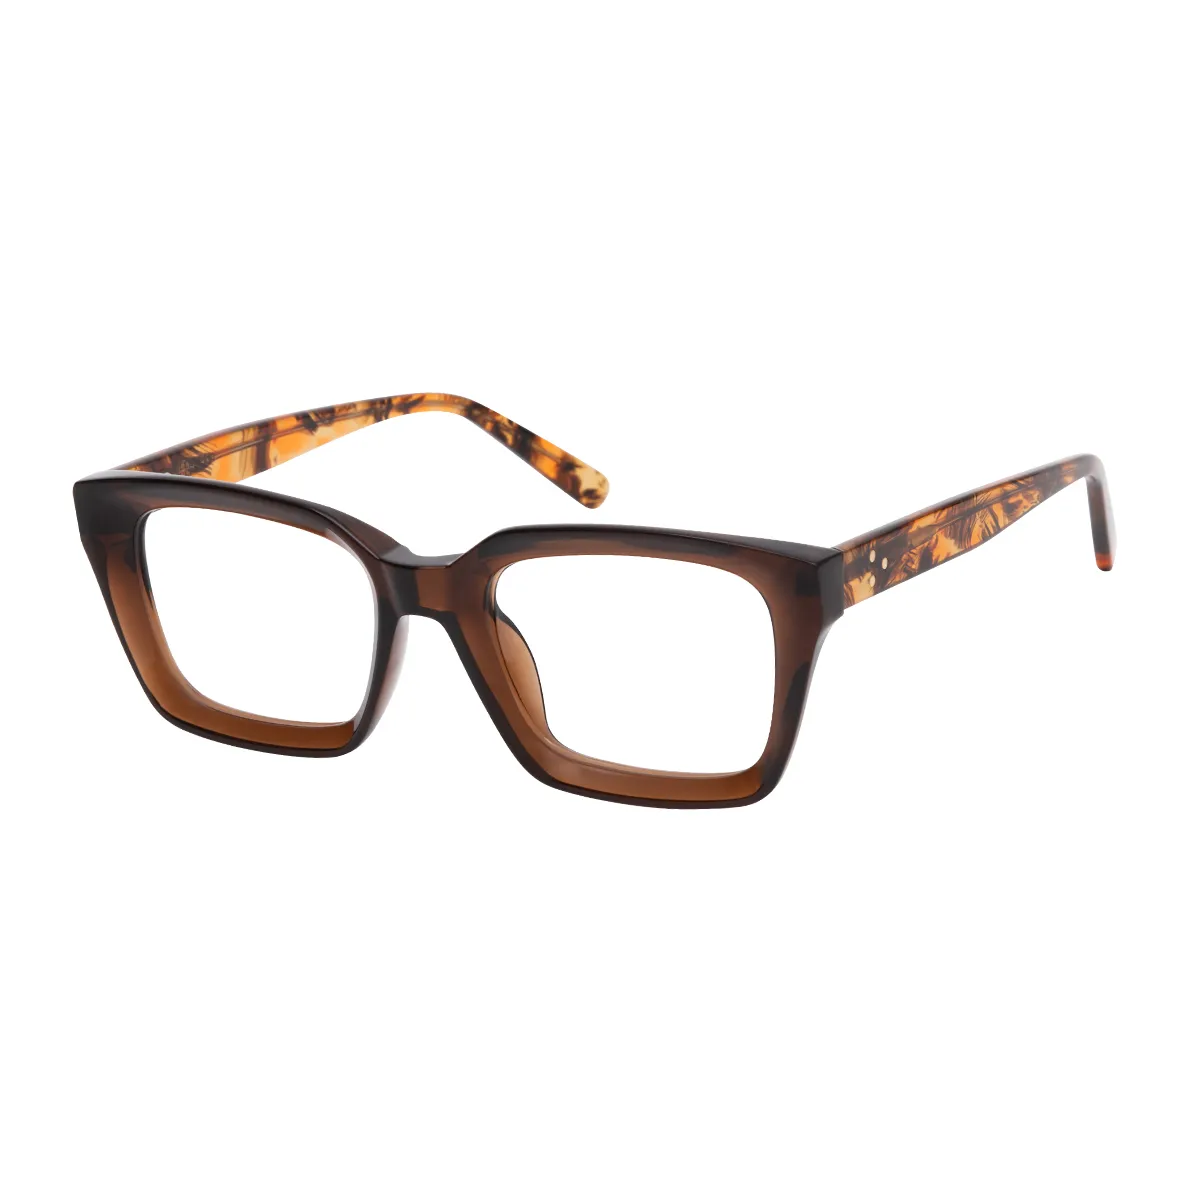 Dario - Square Tortoiseshell Glasses for Women